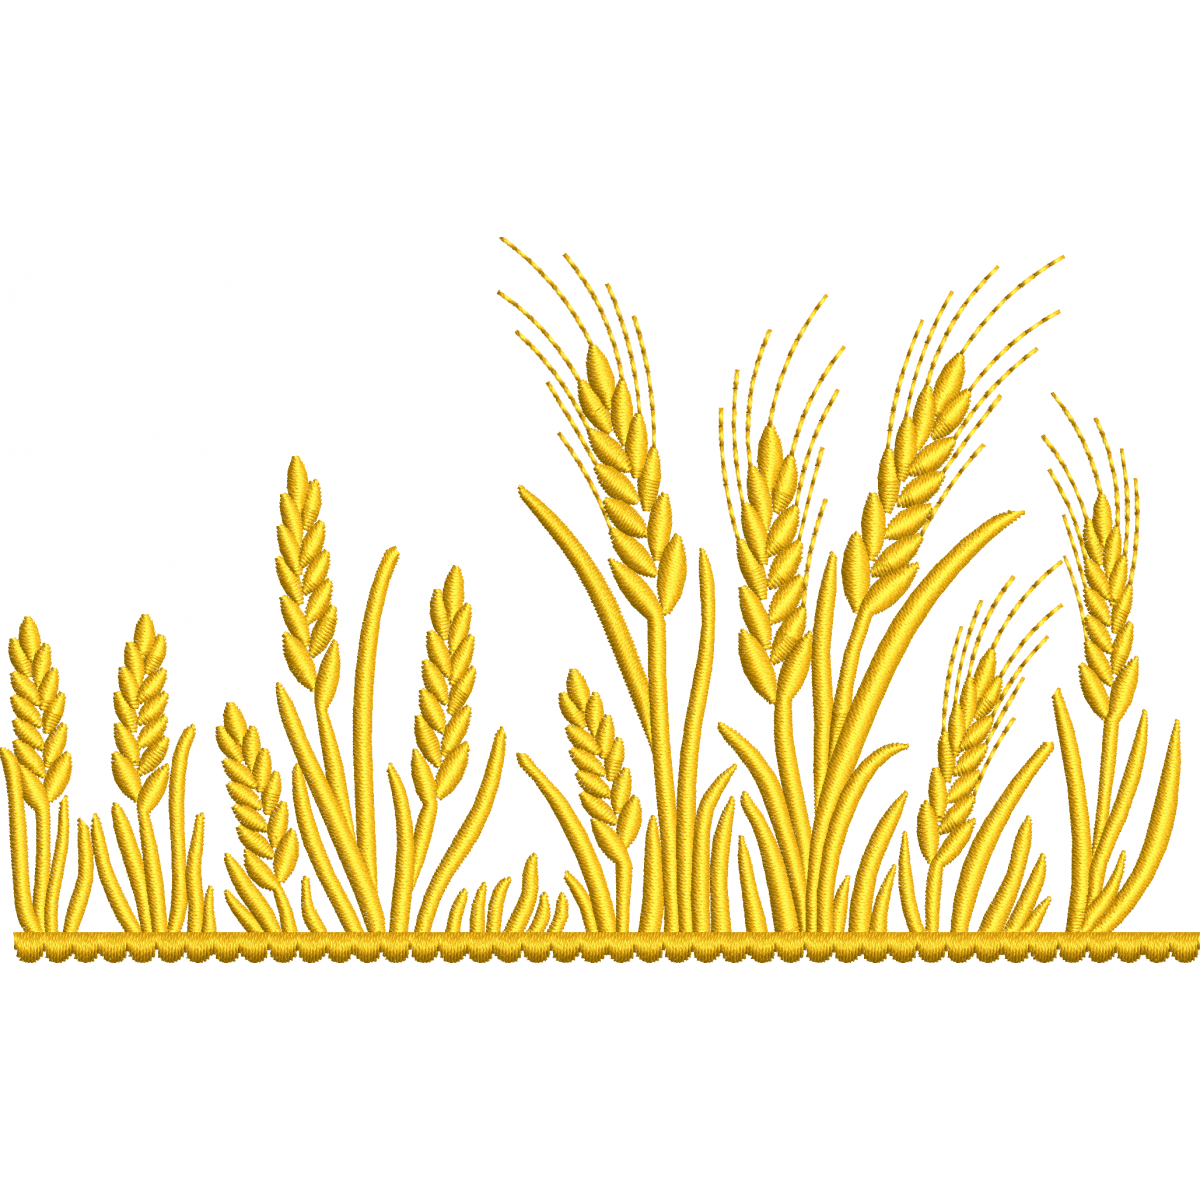 Wheat field embroidery design